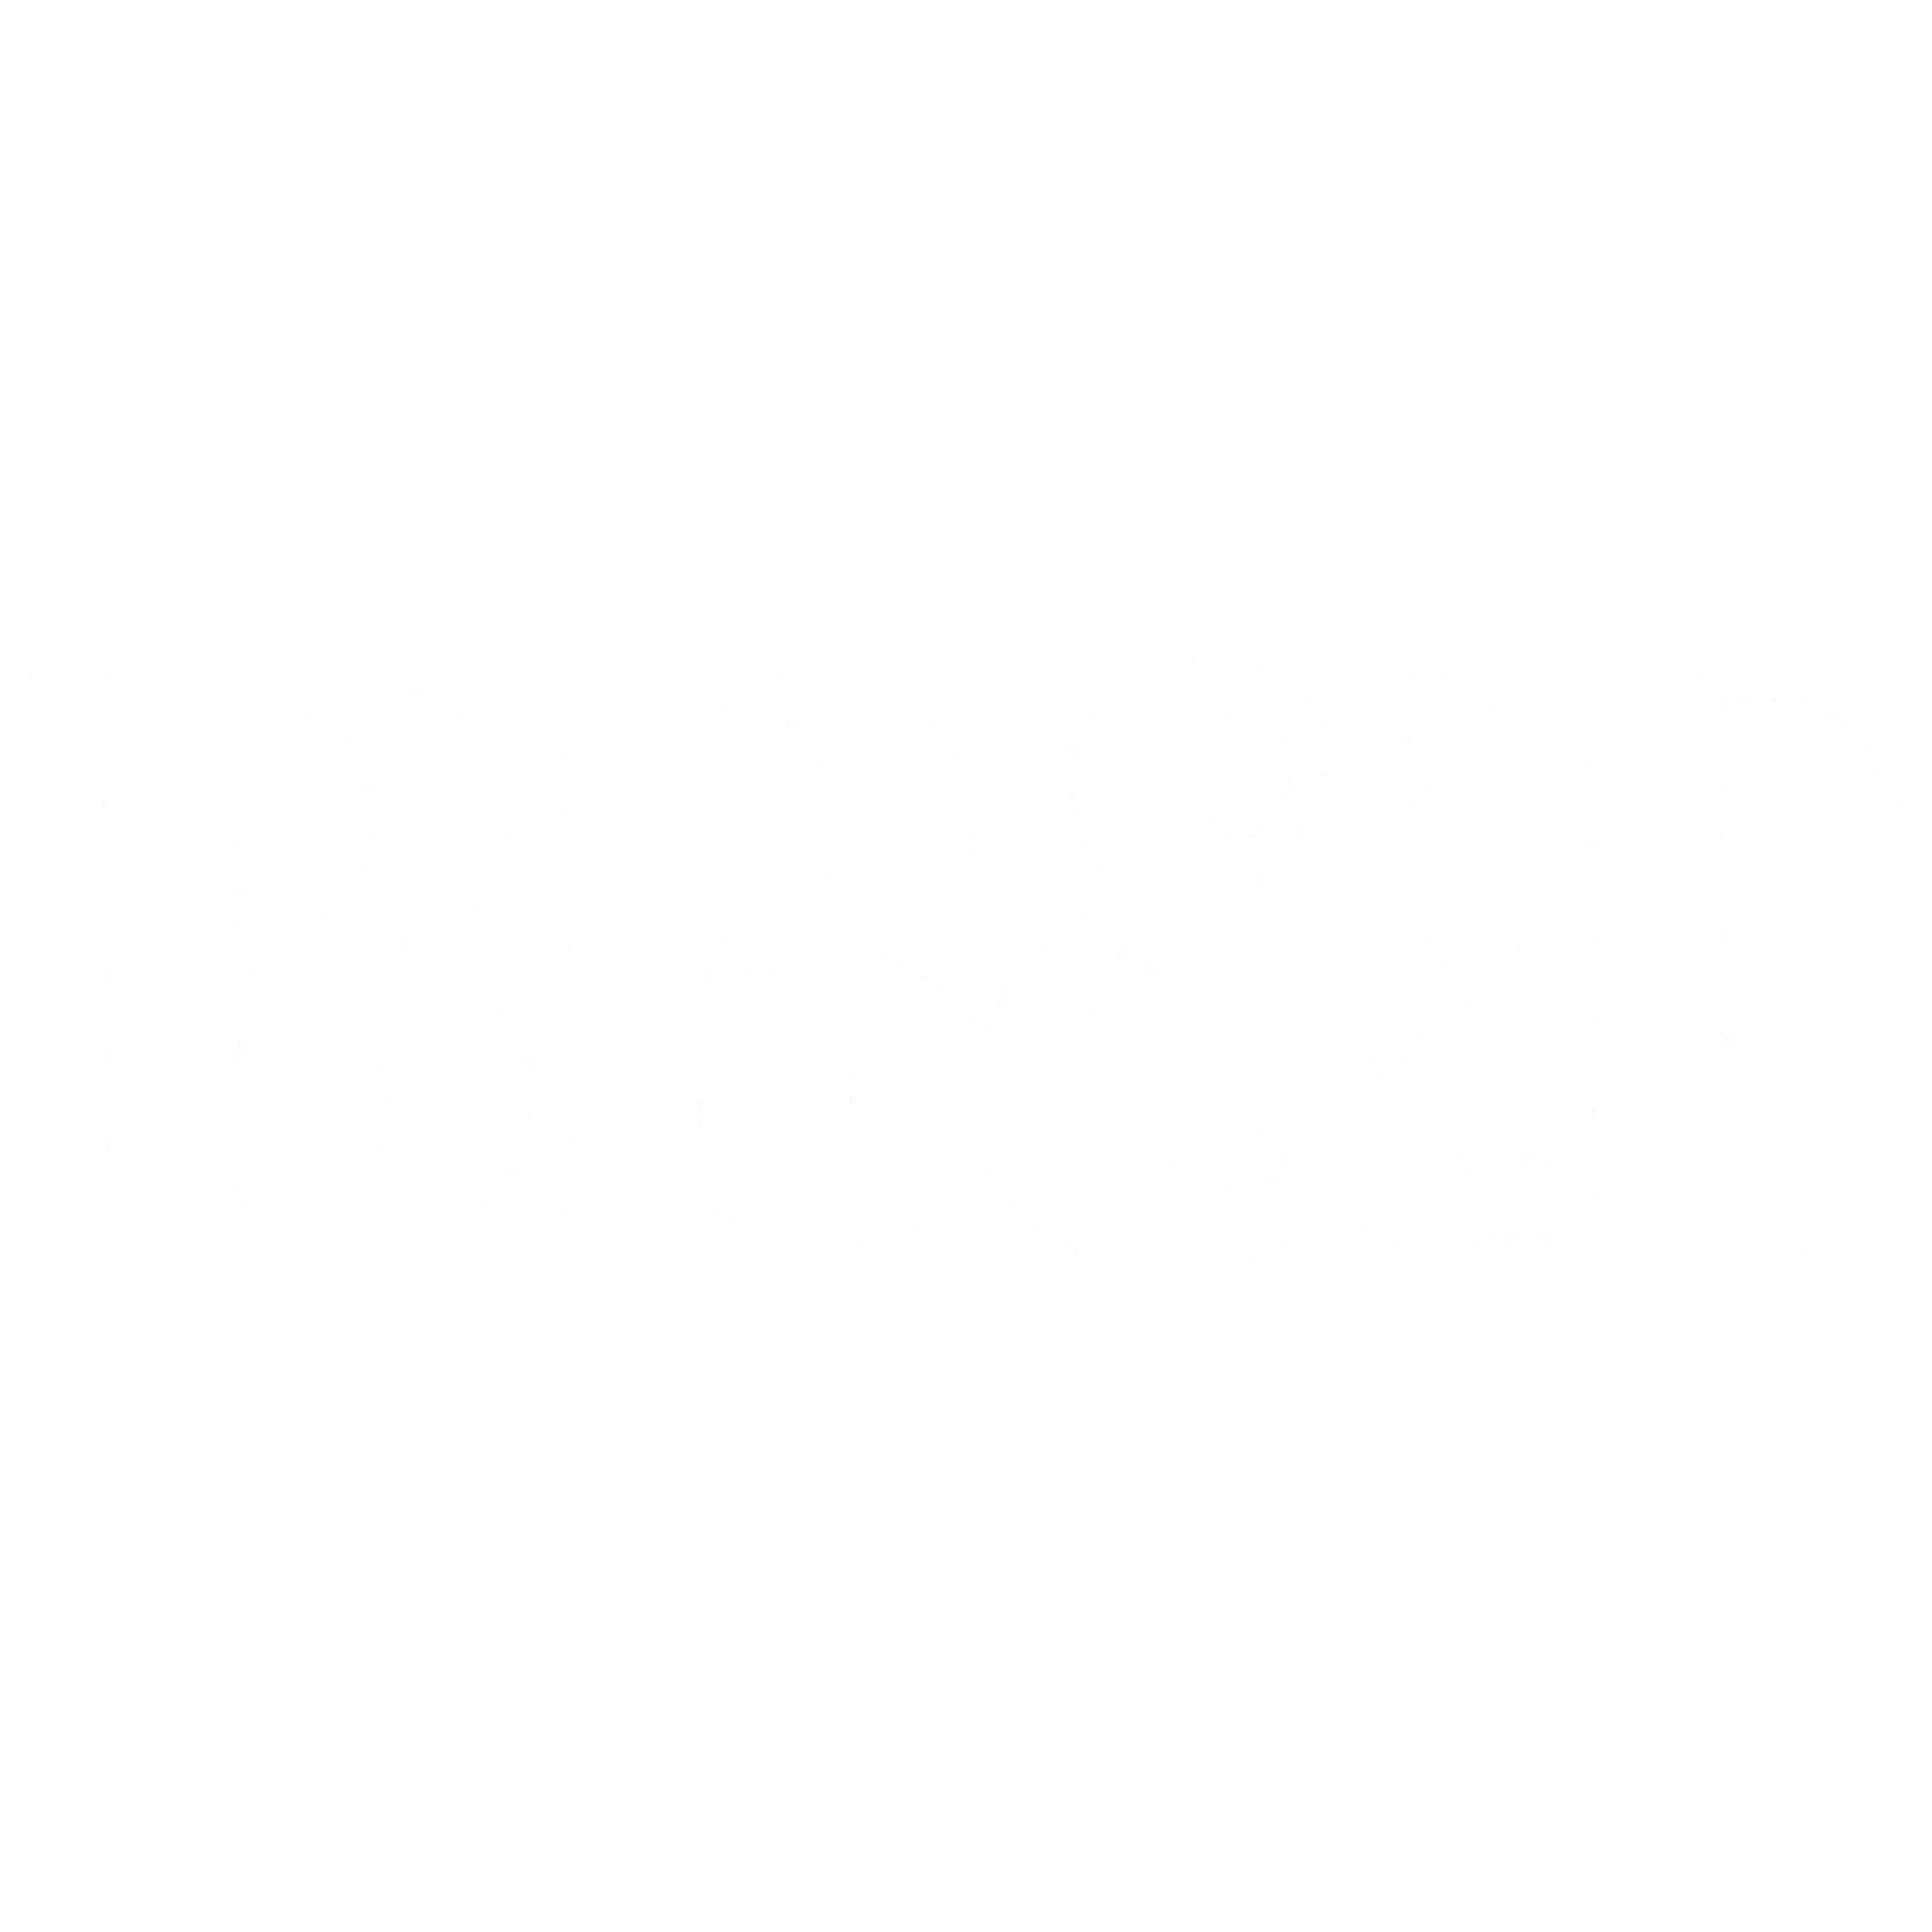 BB&T Logo - BB&T Logo PNG Transparent & SVG Vector - Freebie Supply